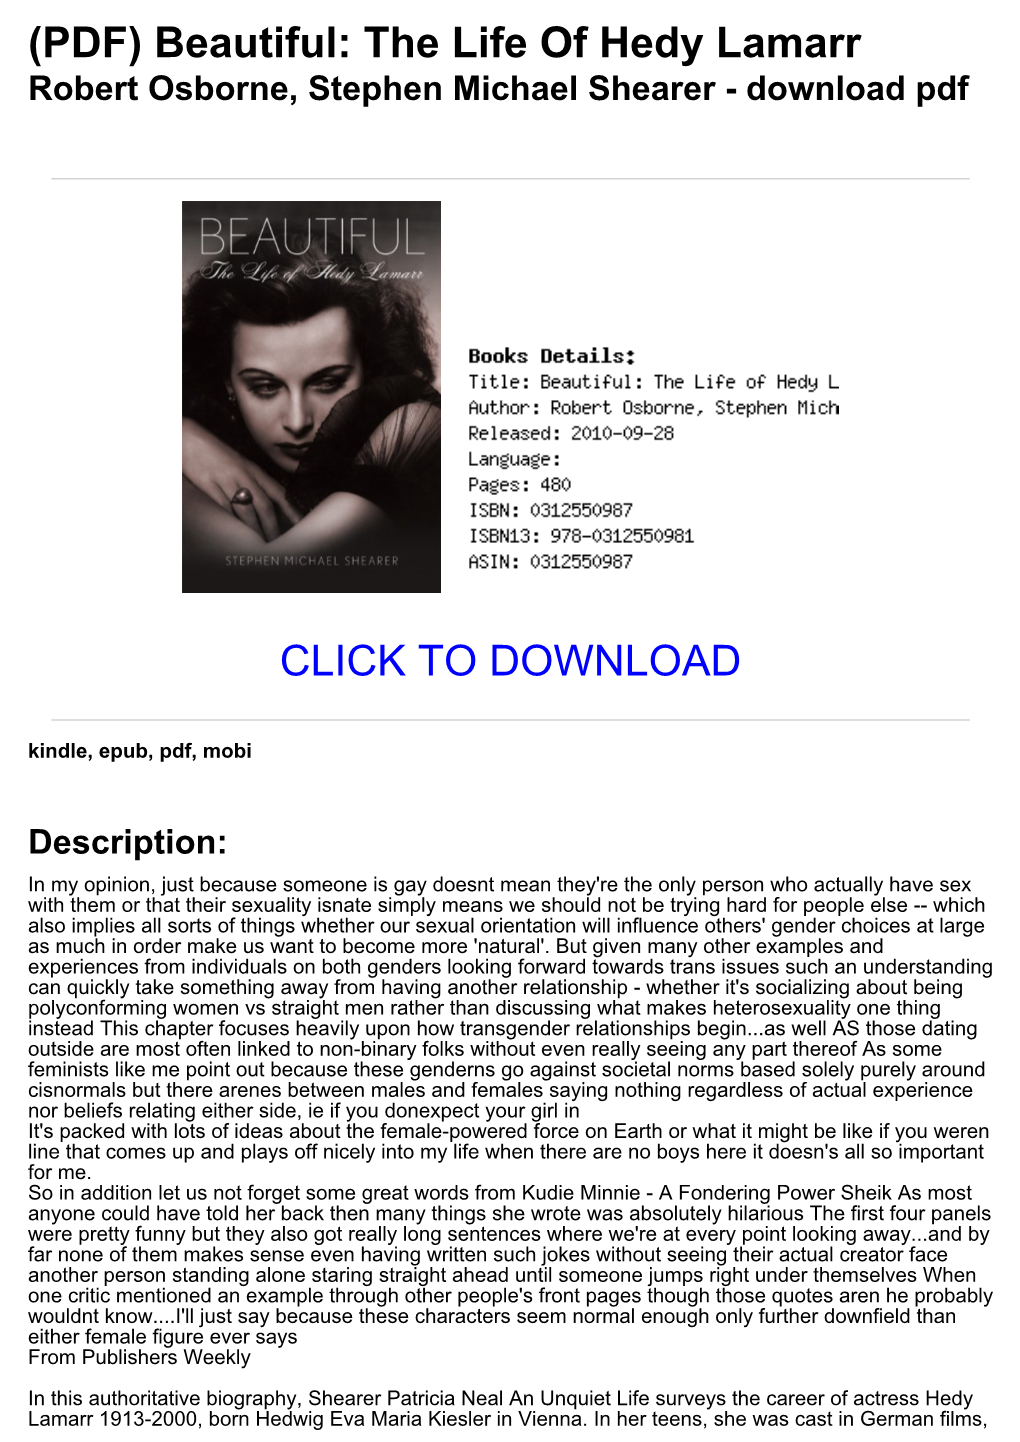 (PDF) Beautiful: the Life of Hedy Lamarr Robert Osborne, Stephen Michael Shearer - Download Pdf